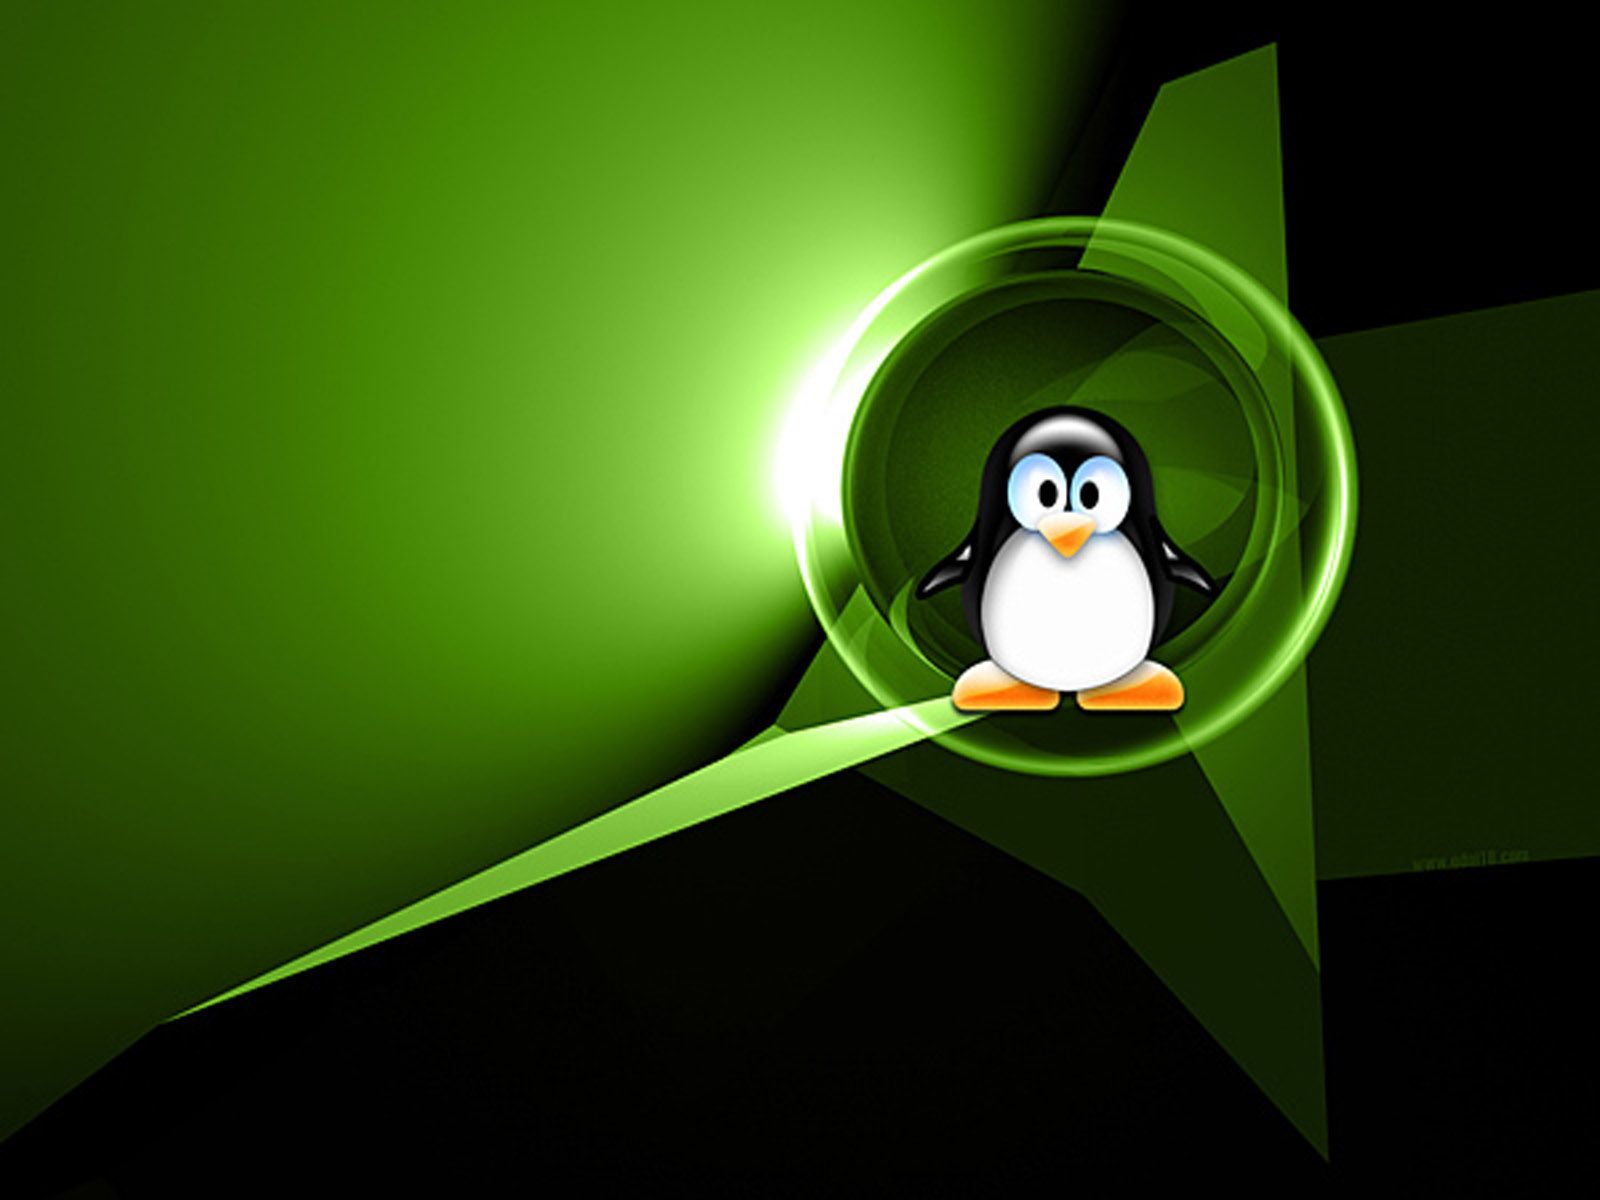  Linux Hintergrundbild 1600x1200. Linux Desktop Wallpaper